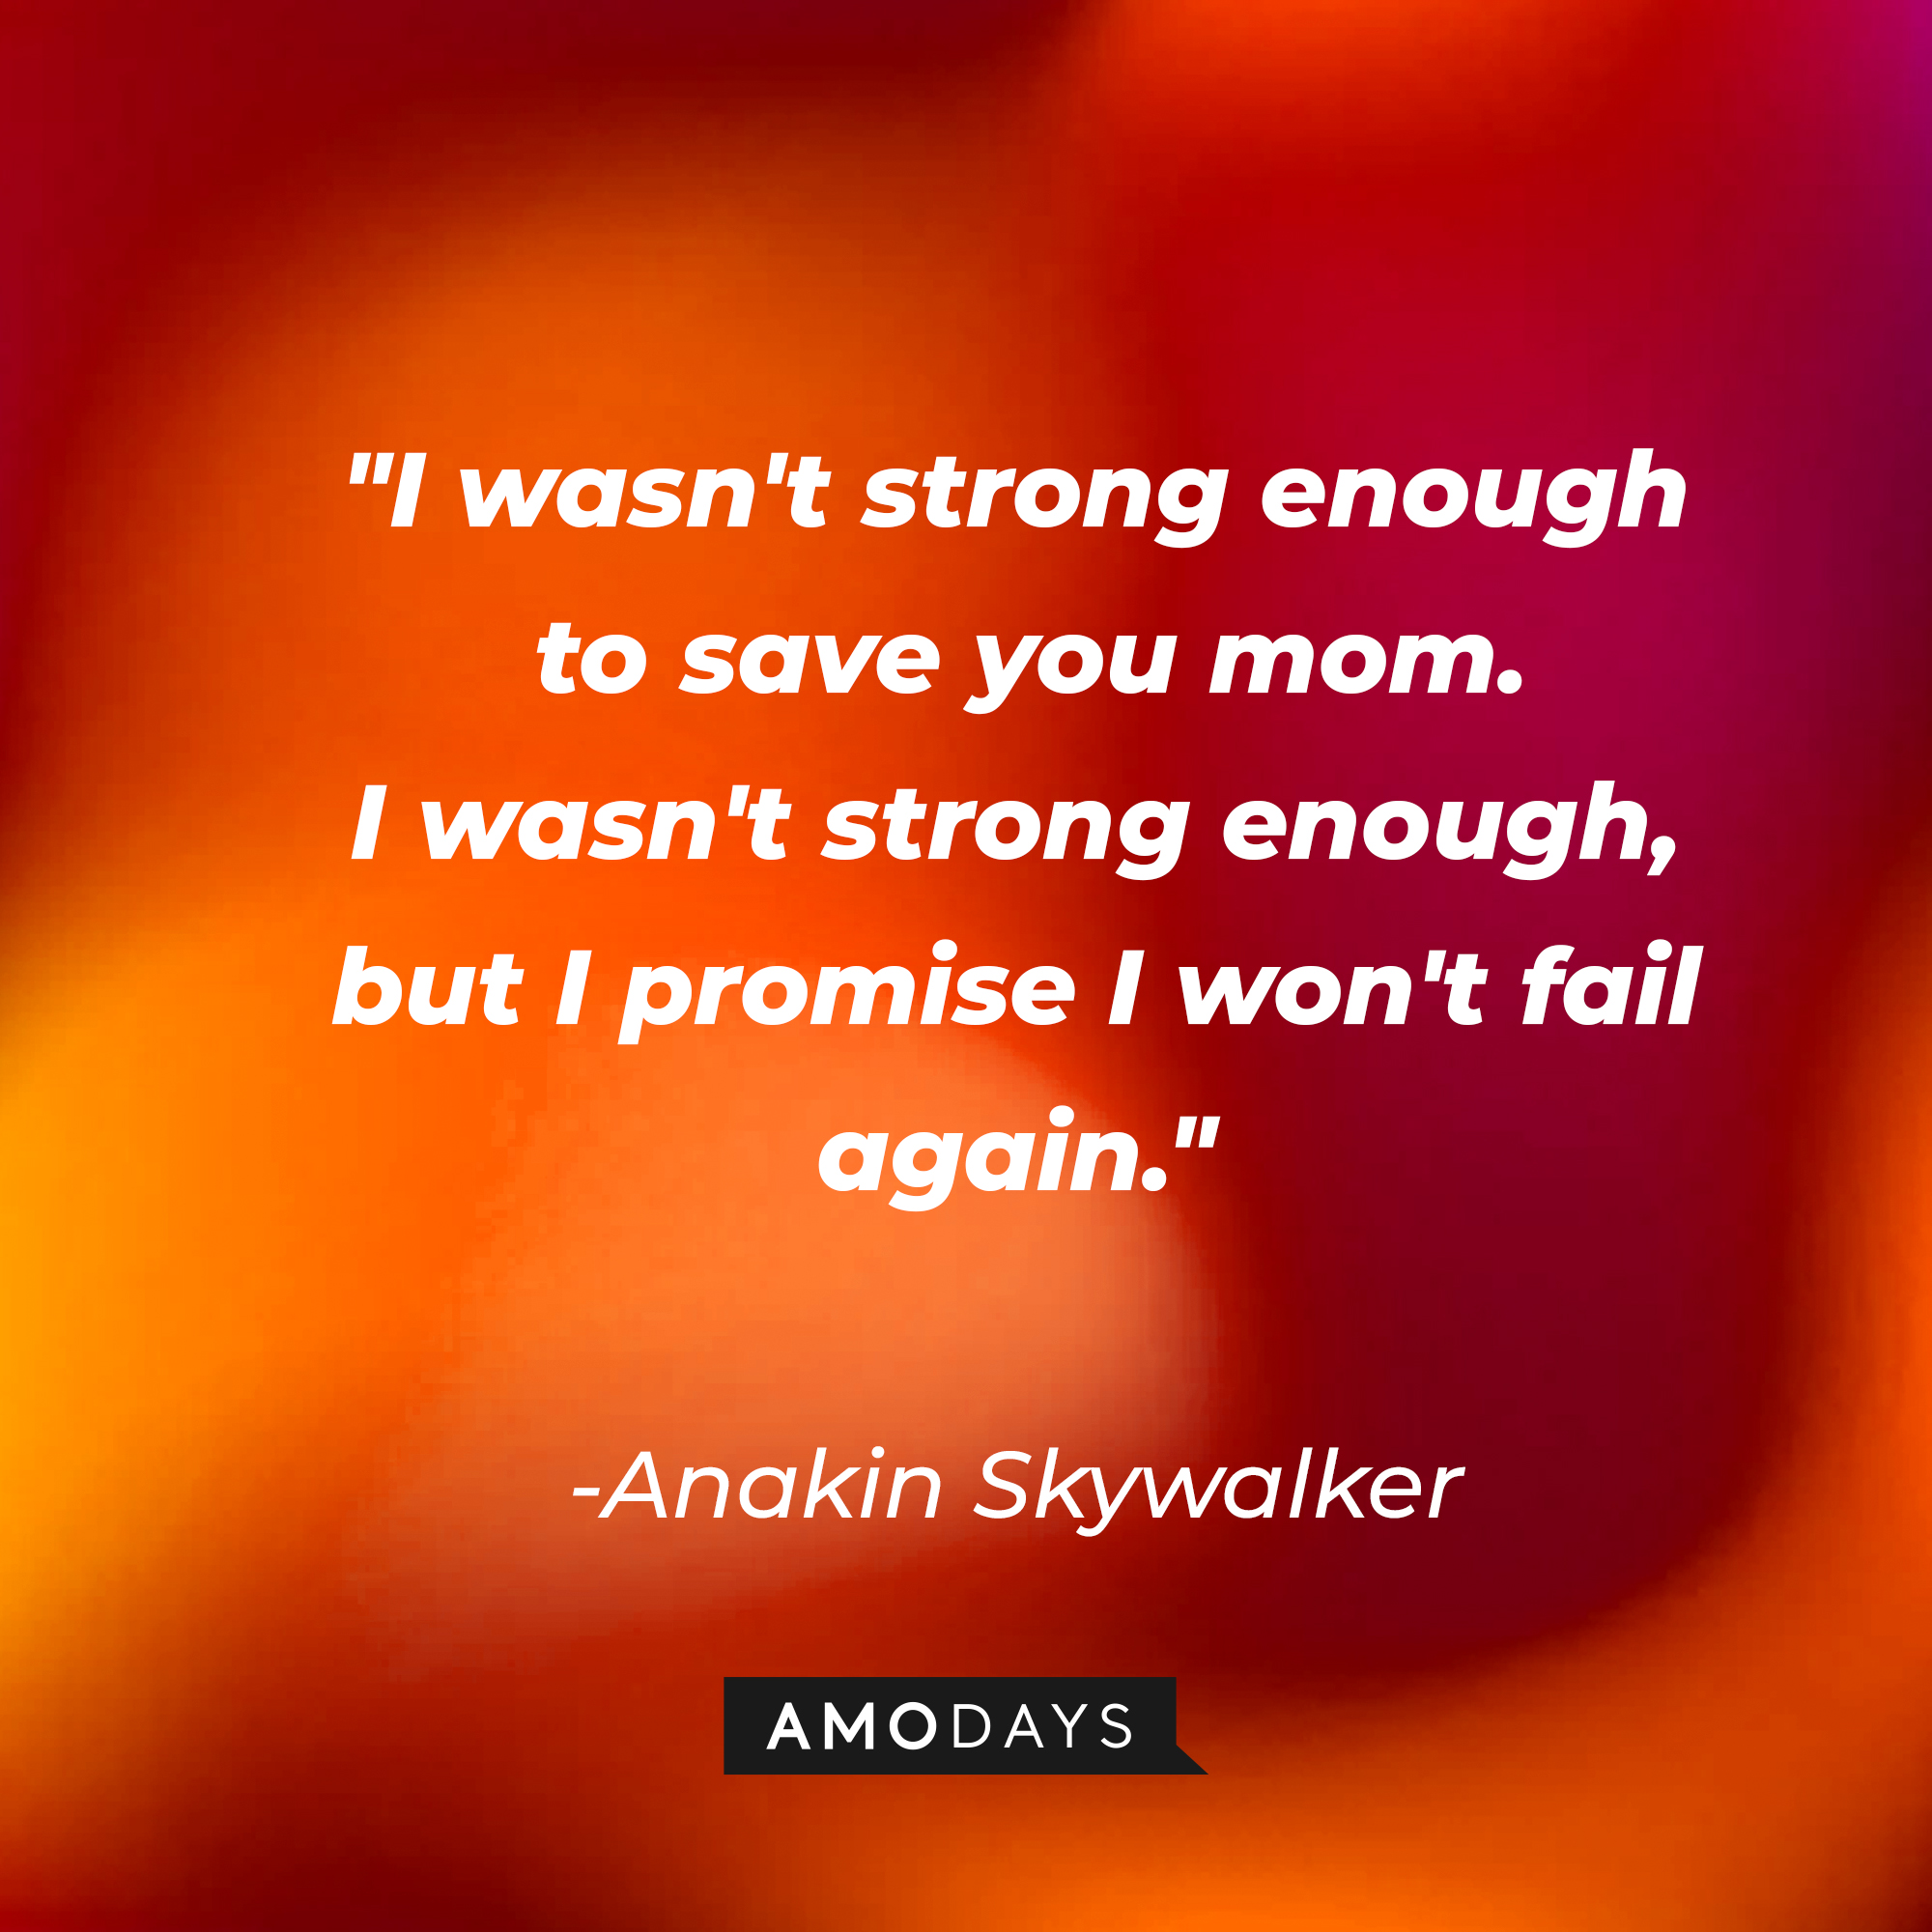 Anakin Skywalker's quote: "I wasn't strong enough to save you mom. I wasn't strong enough, but I promise I won't fail again." | Source: AmoDays